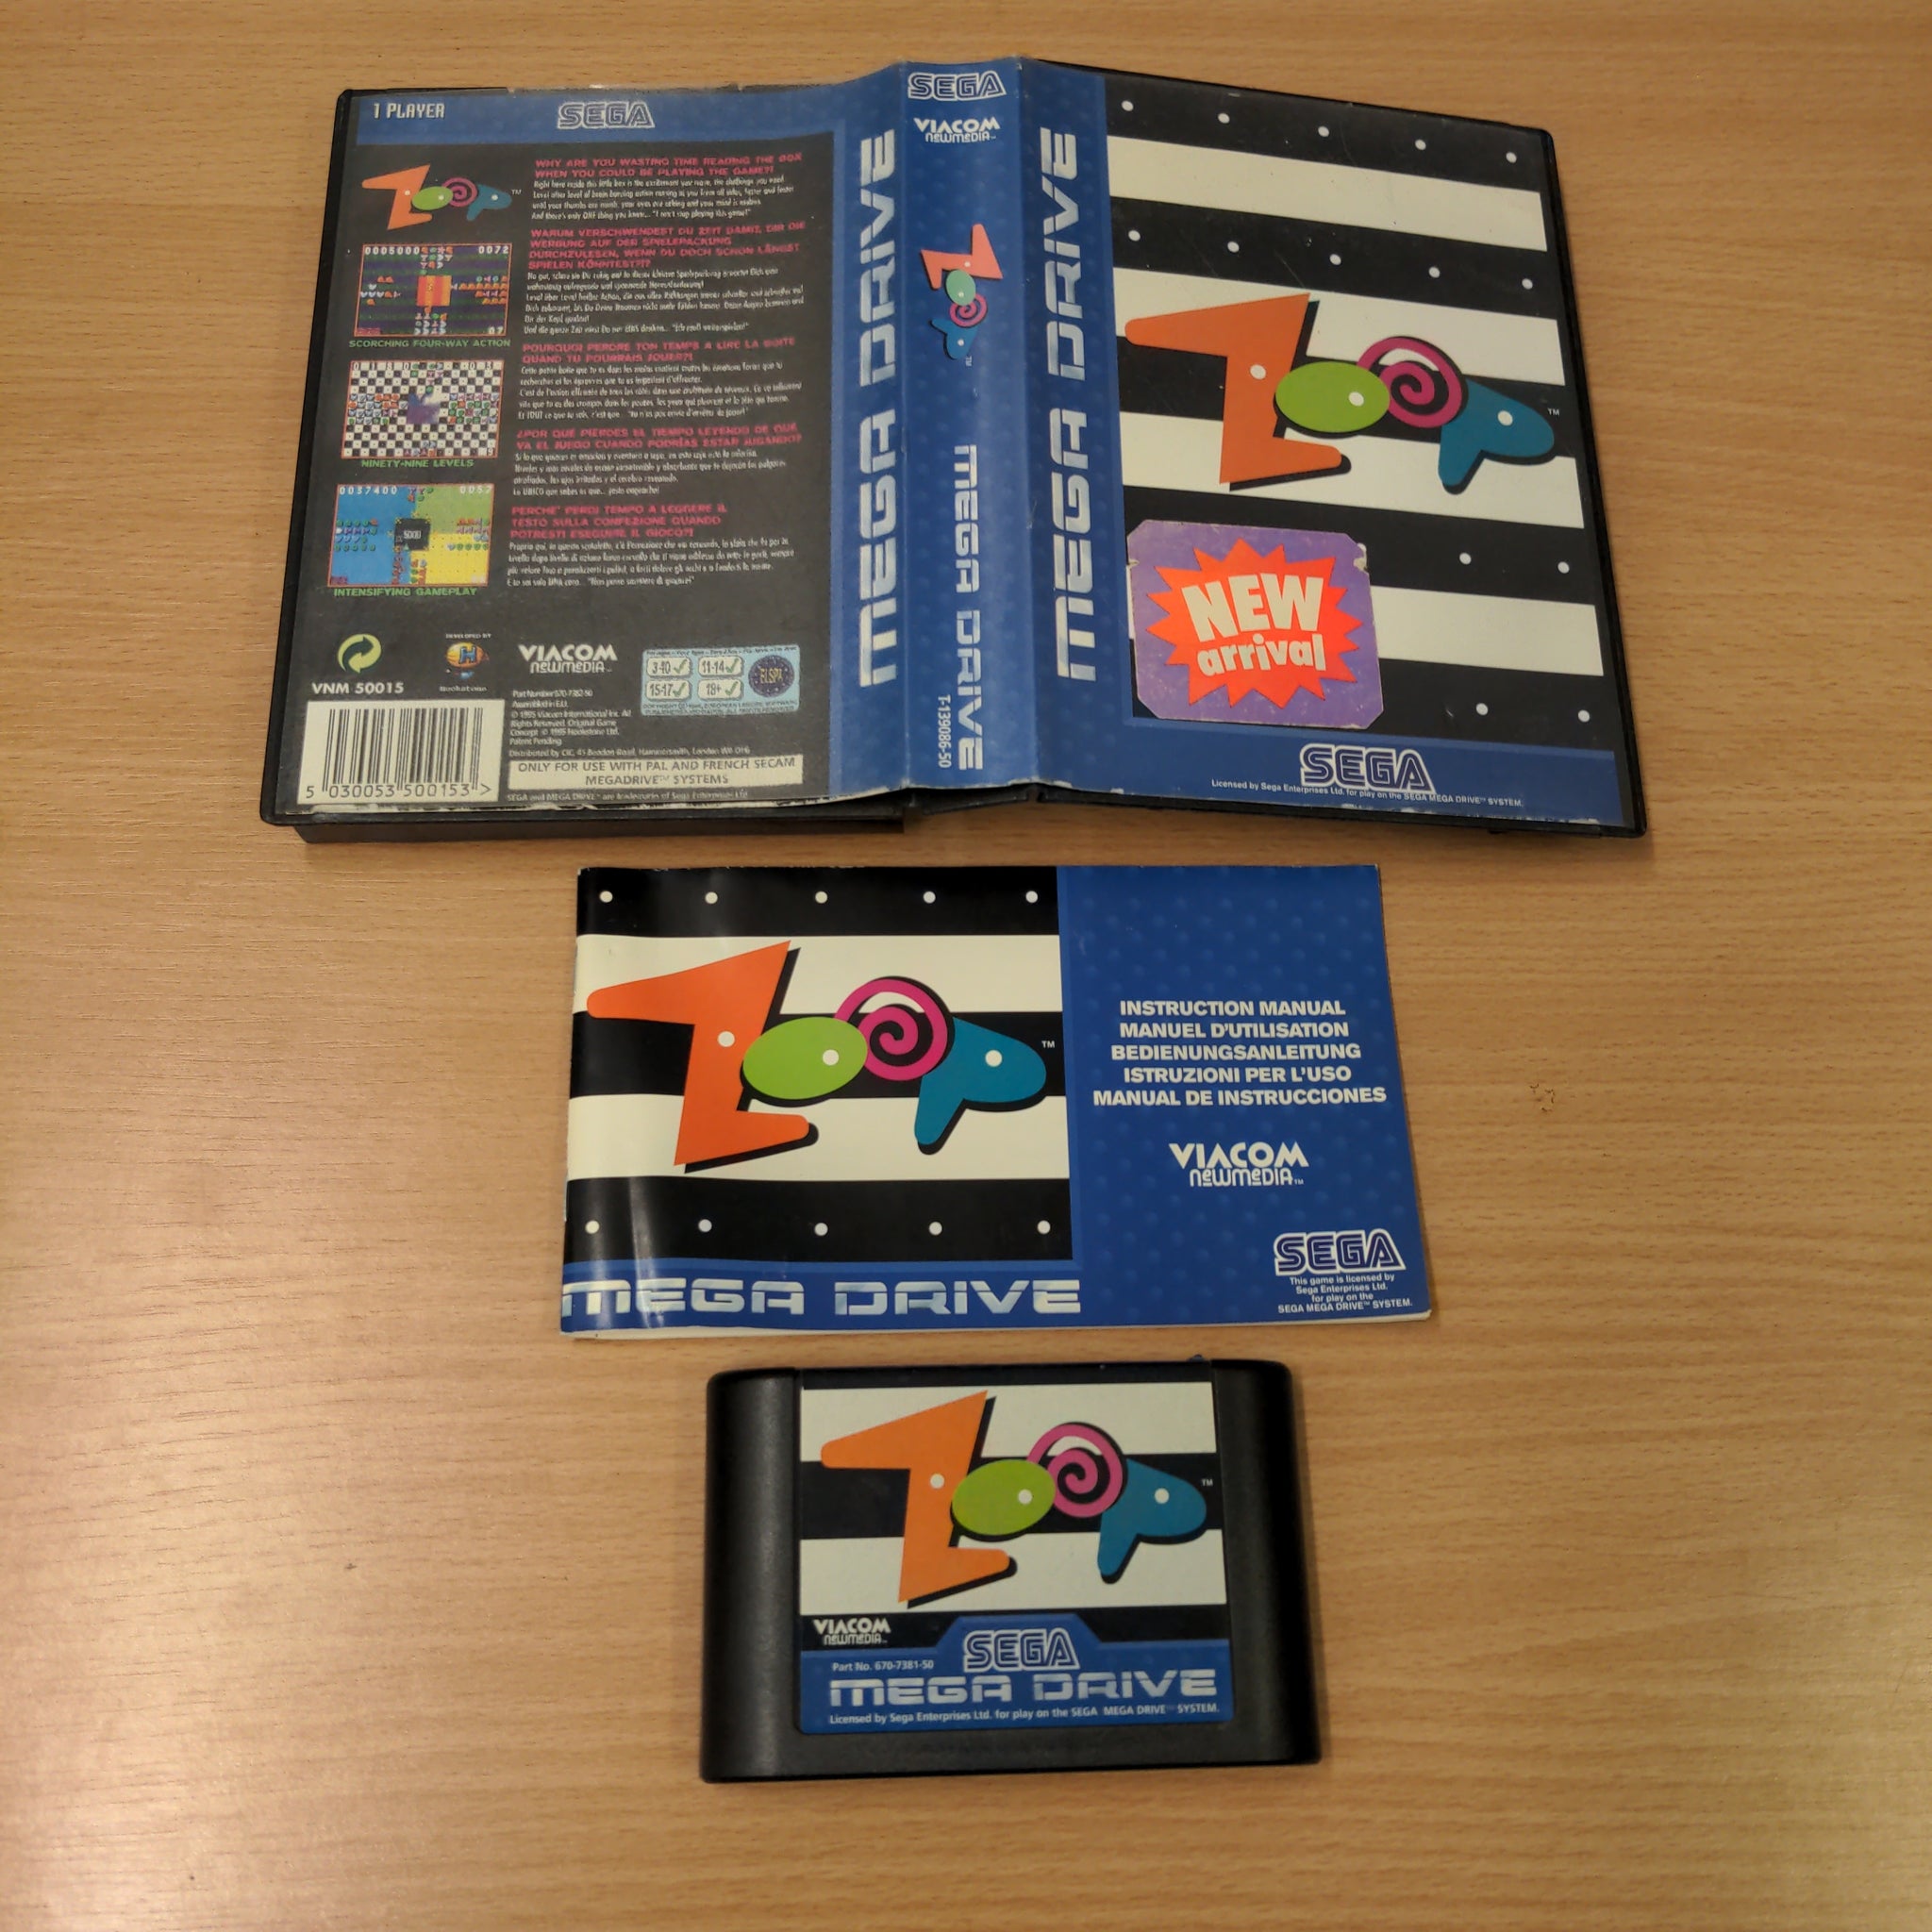 Zoop Sega Mega Drive game complete